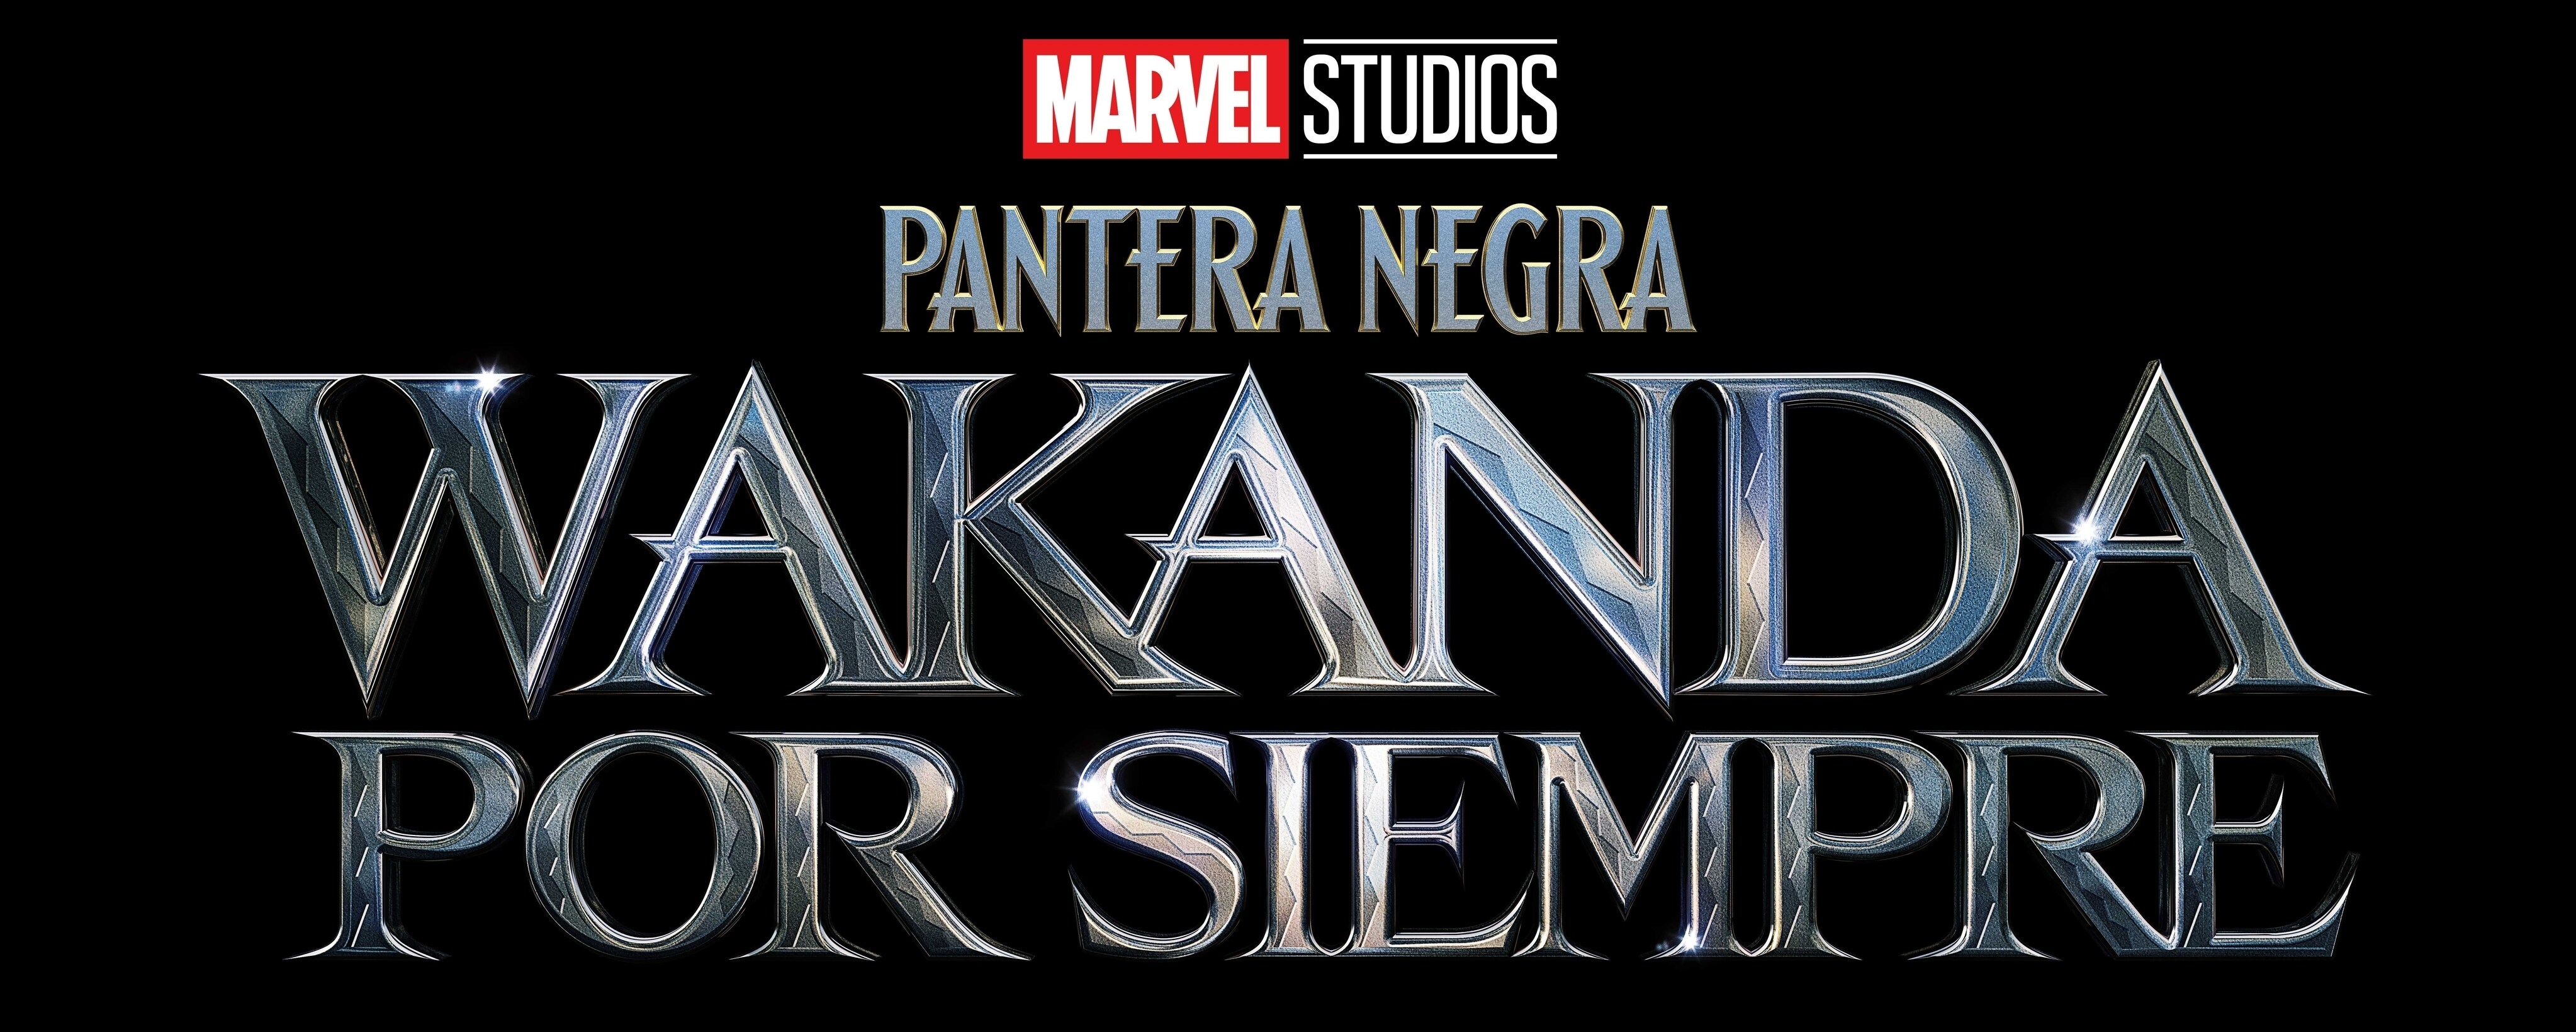 Black Panther, Wakanda Forever